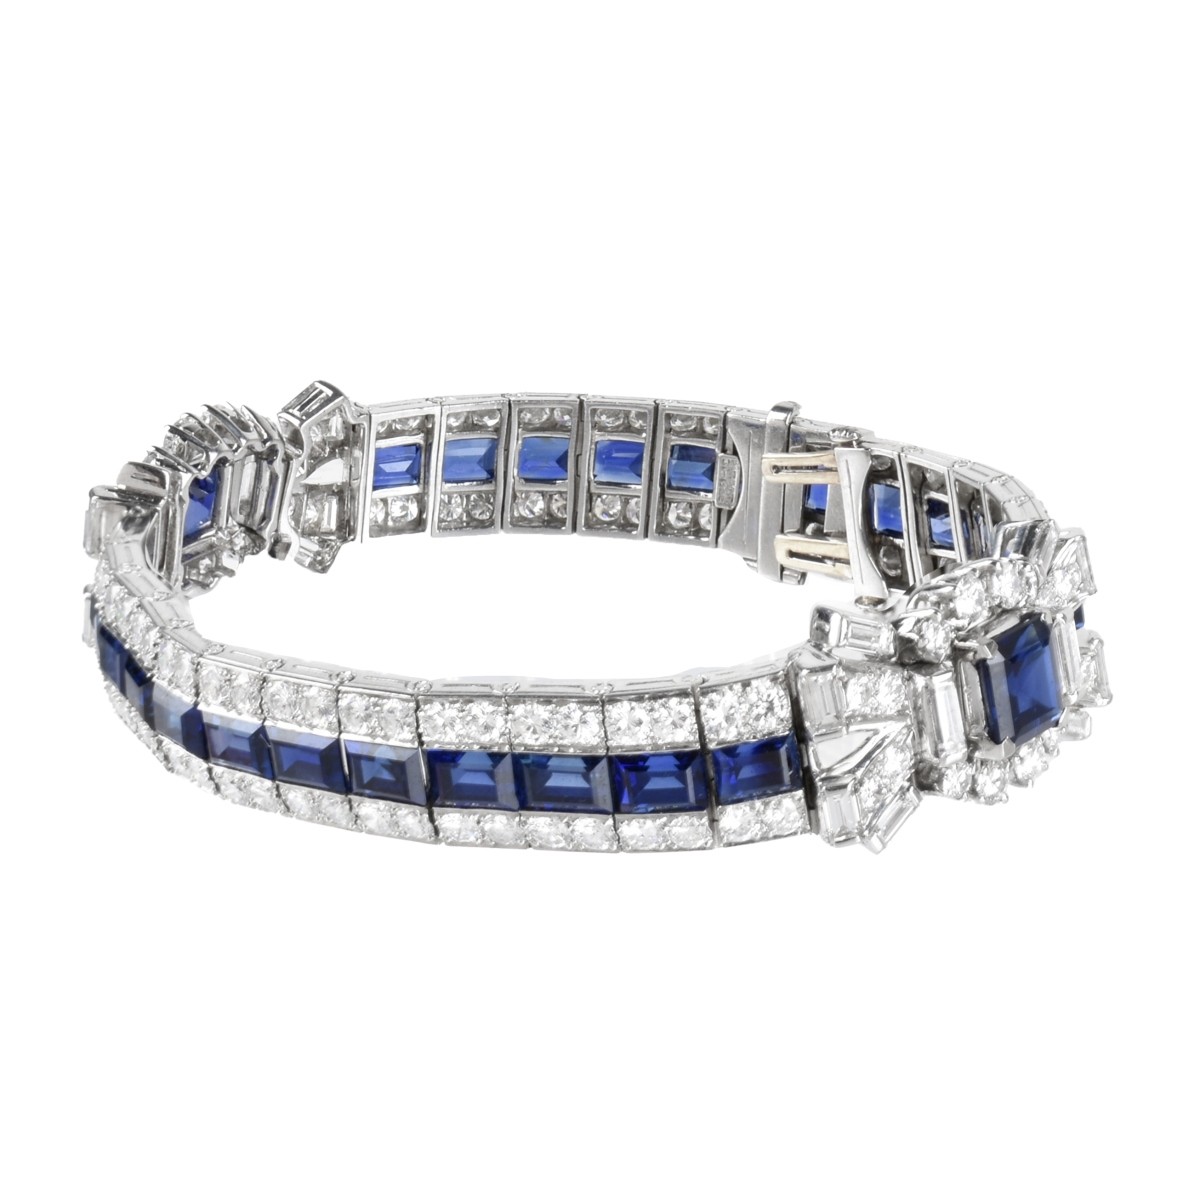 Oscar Heyman Diamond and Sapphire Bracelet